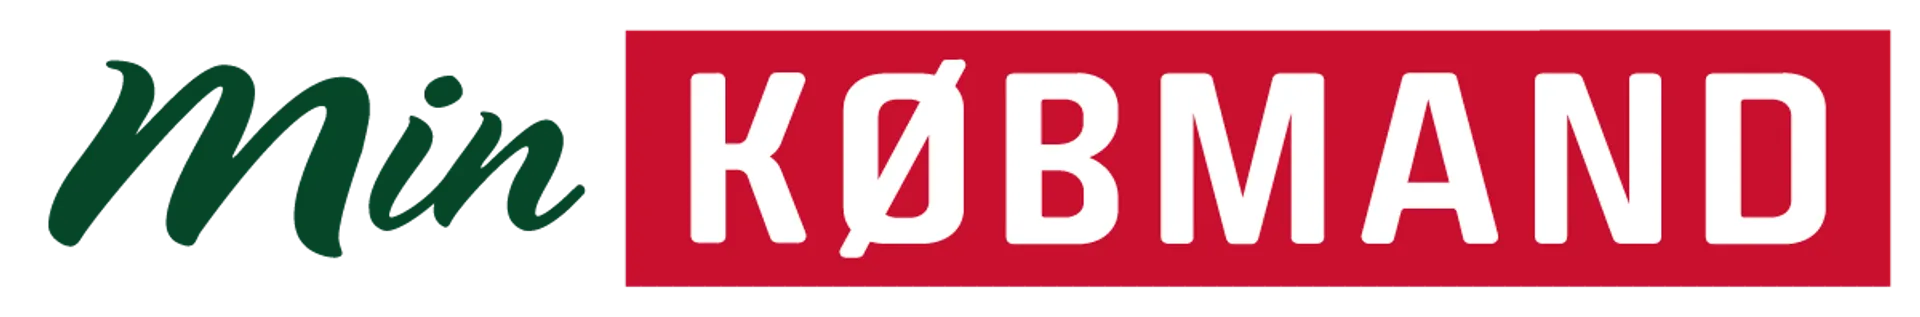 MIN KØBMAND logo